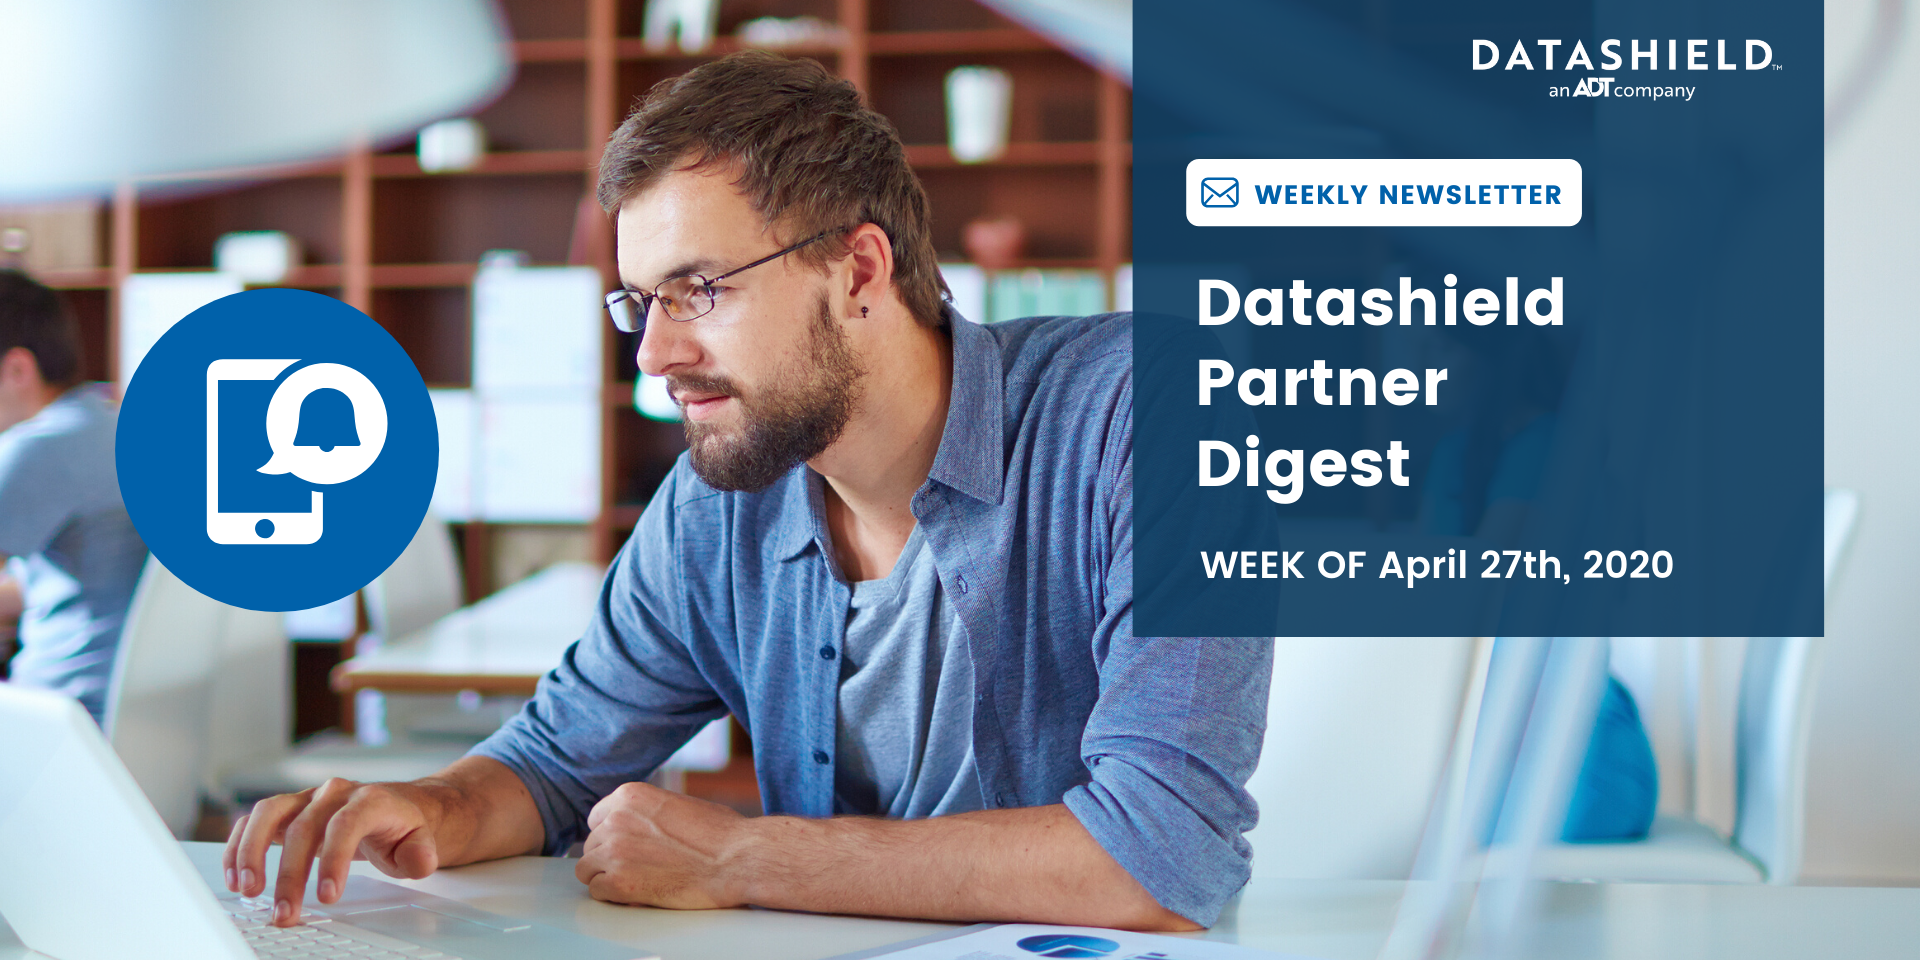 Datashield Partner Digest 04/27/20